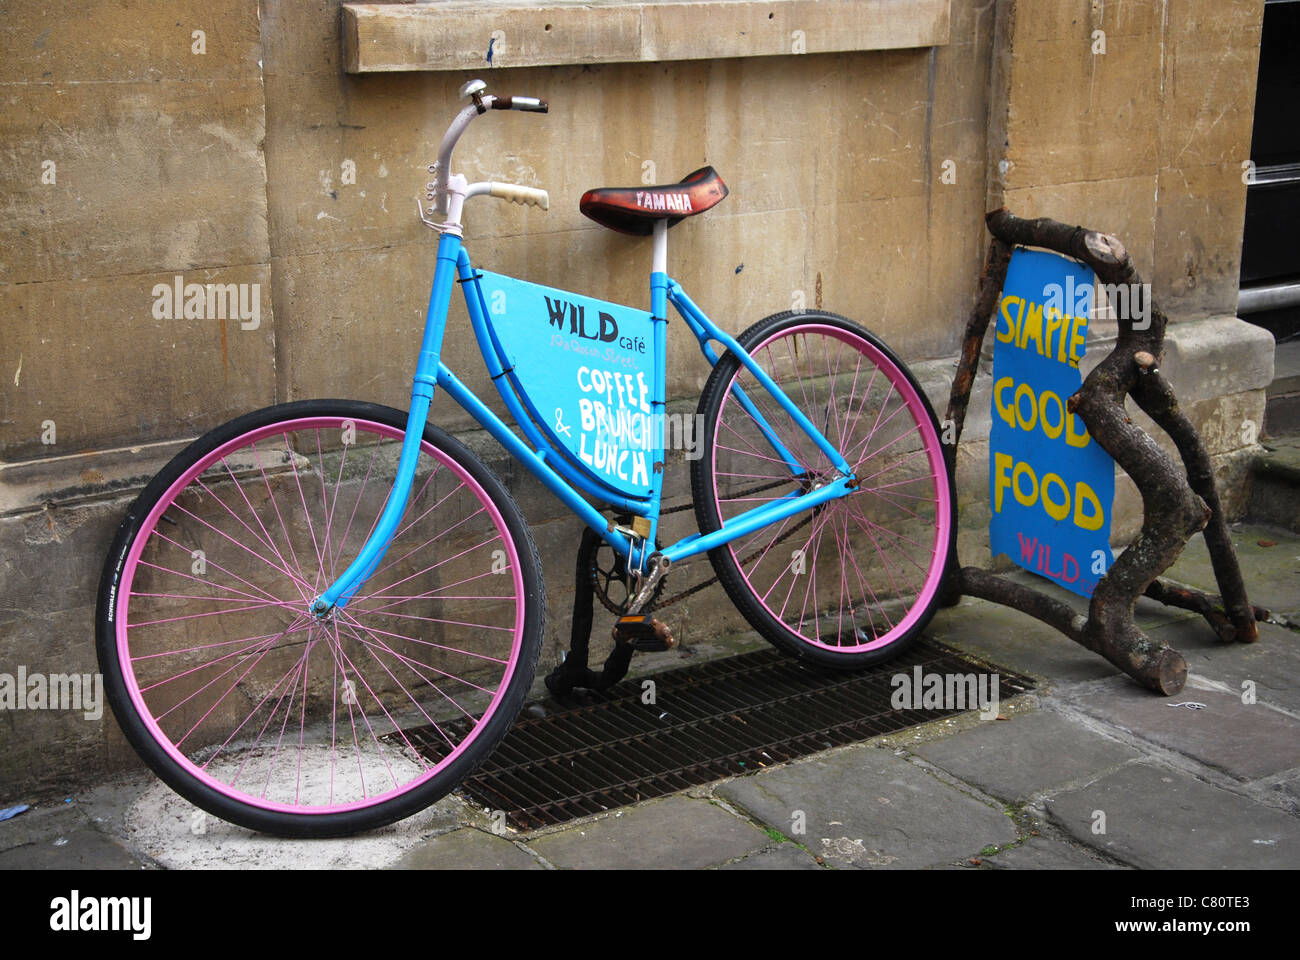 promo bike at the Wild Cafe Bath UK Stock Photo - Alamy